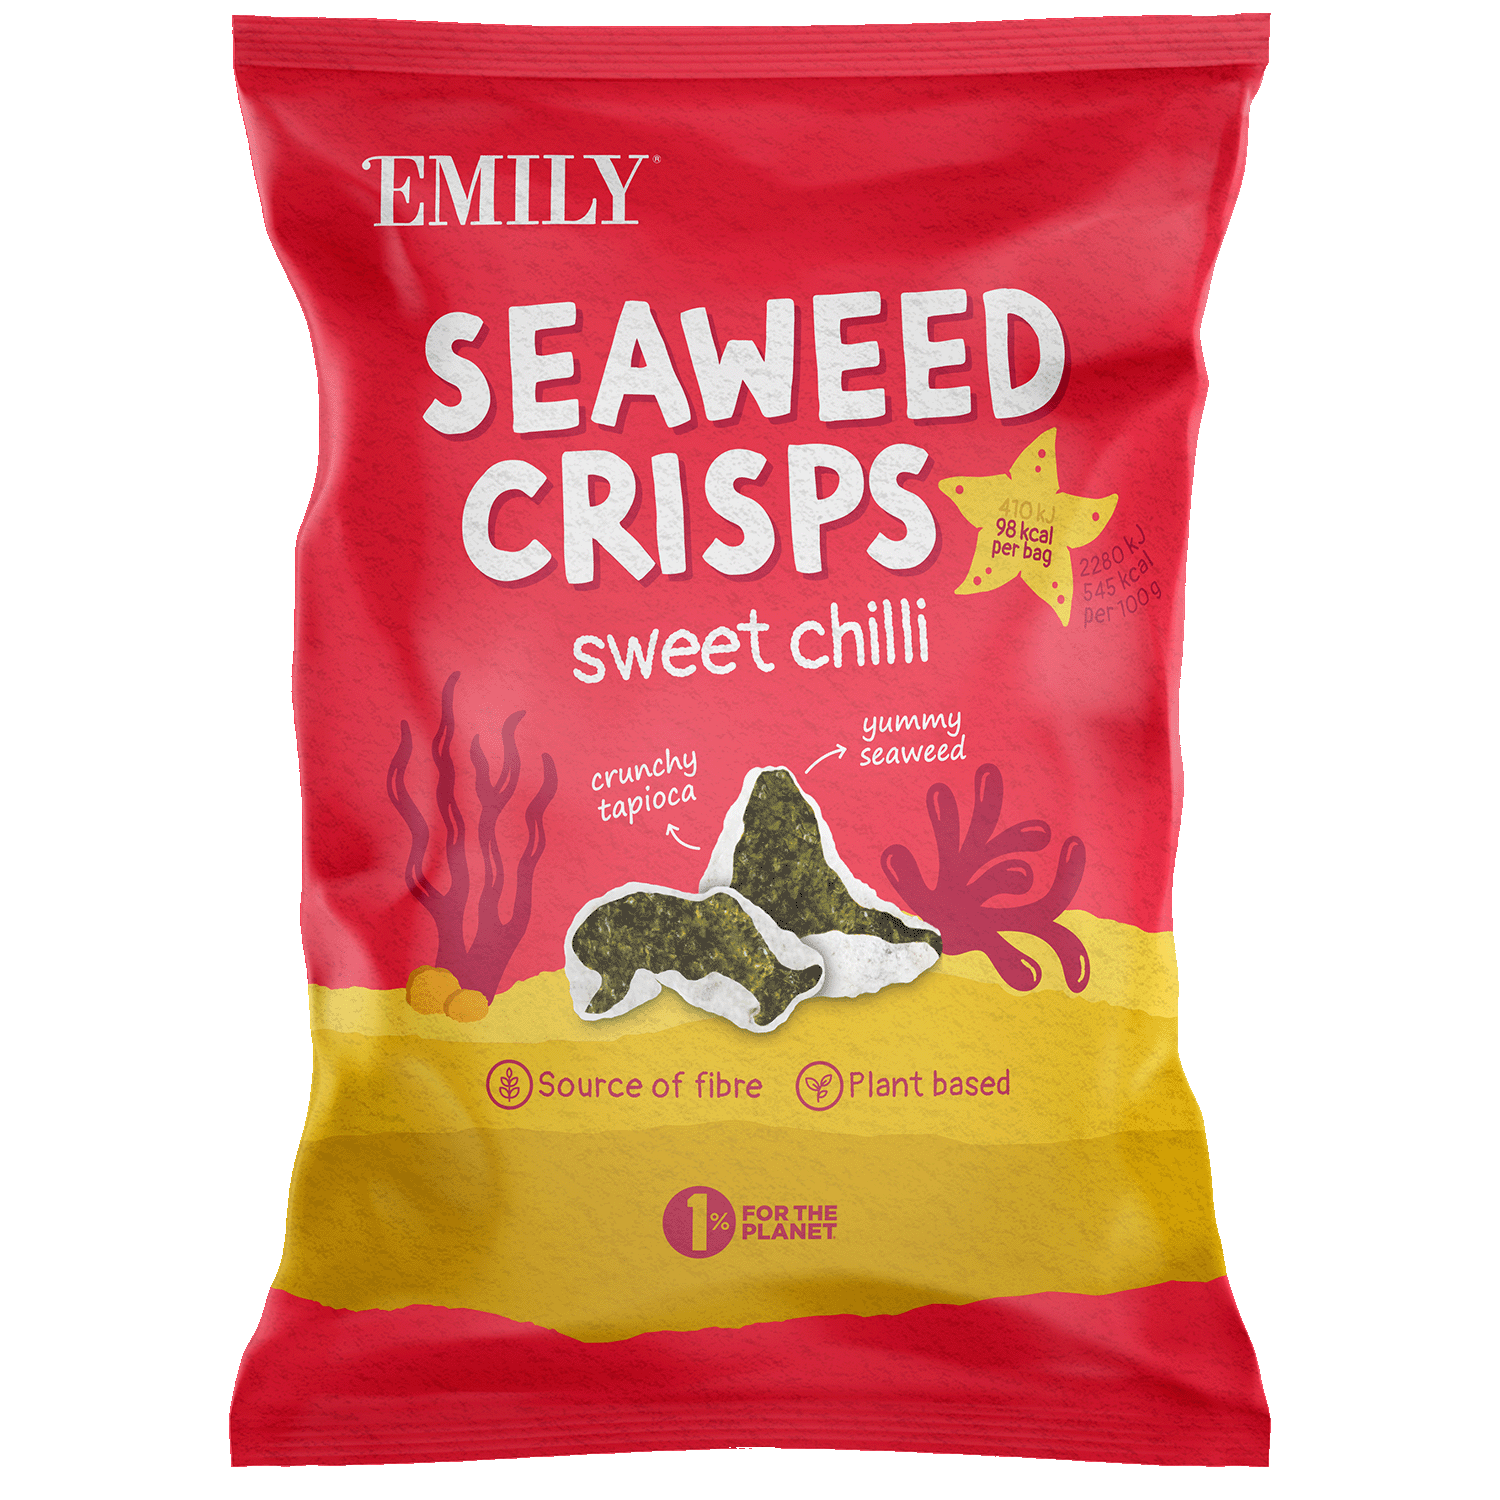 Seaweed Crisps Sweet Chilli, 18g